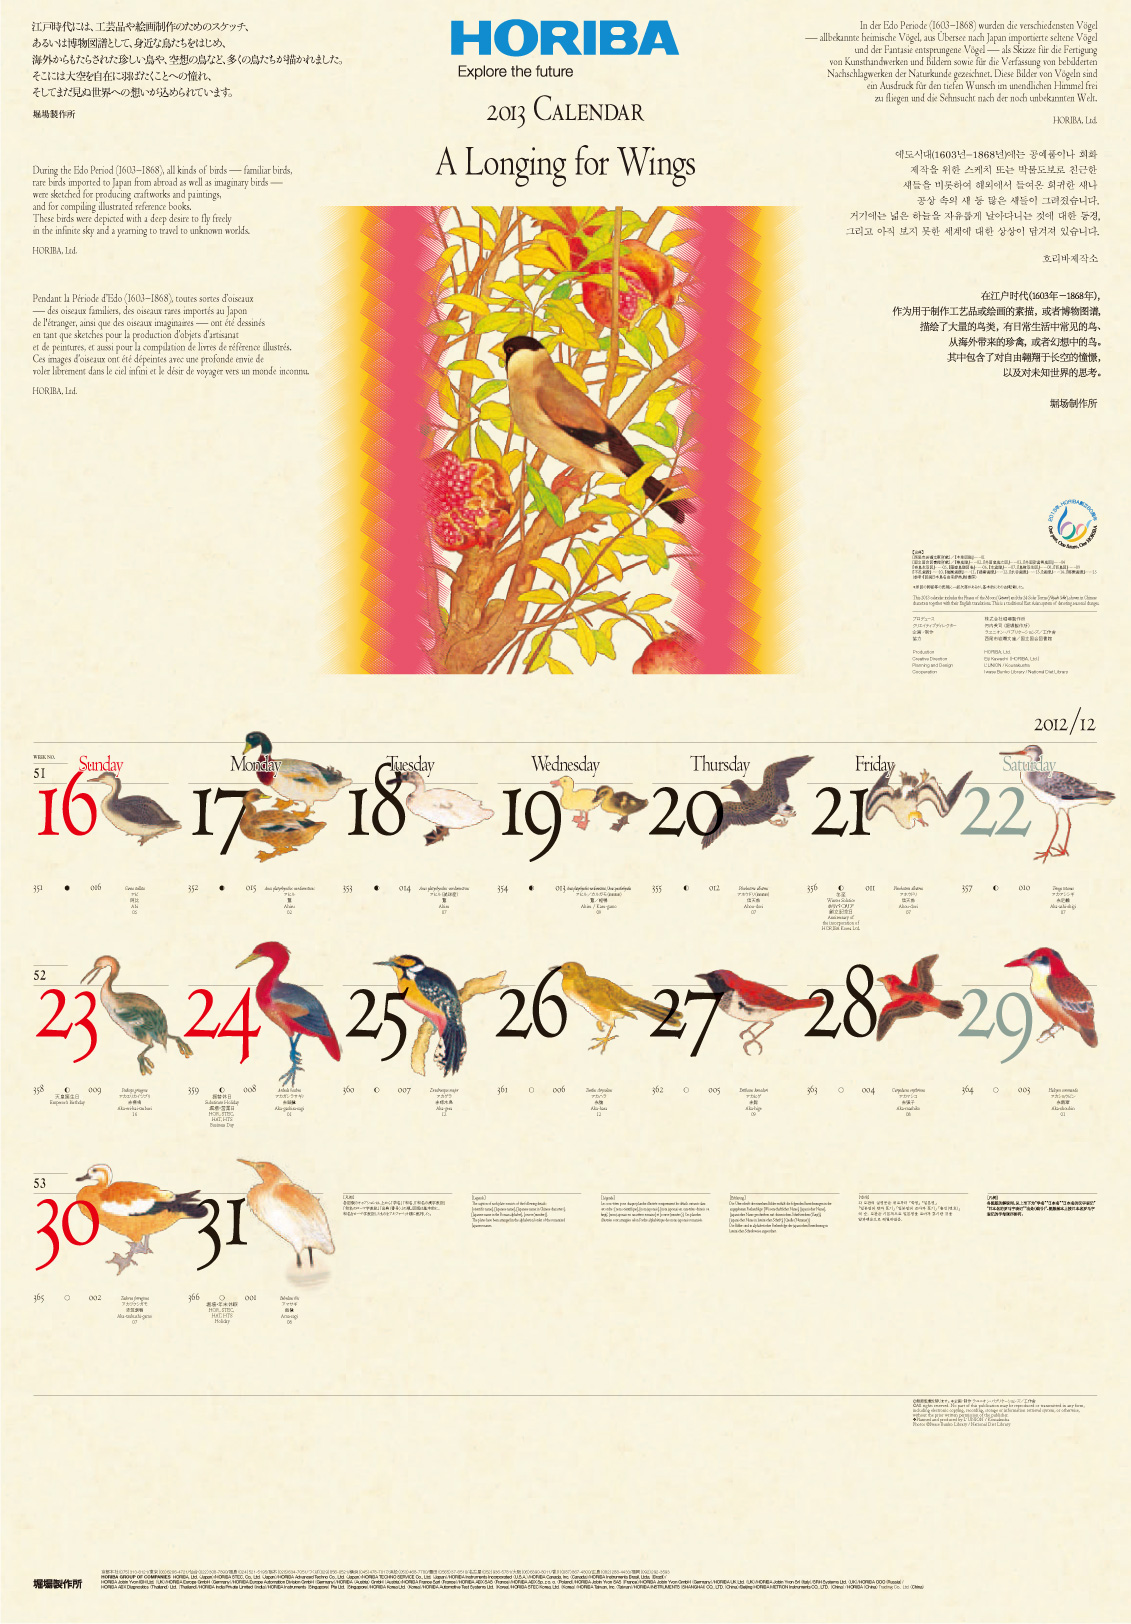 HORIBA Calendar 2013